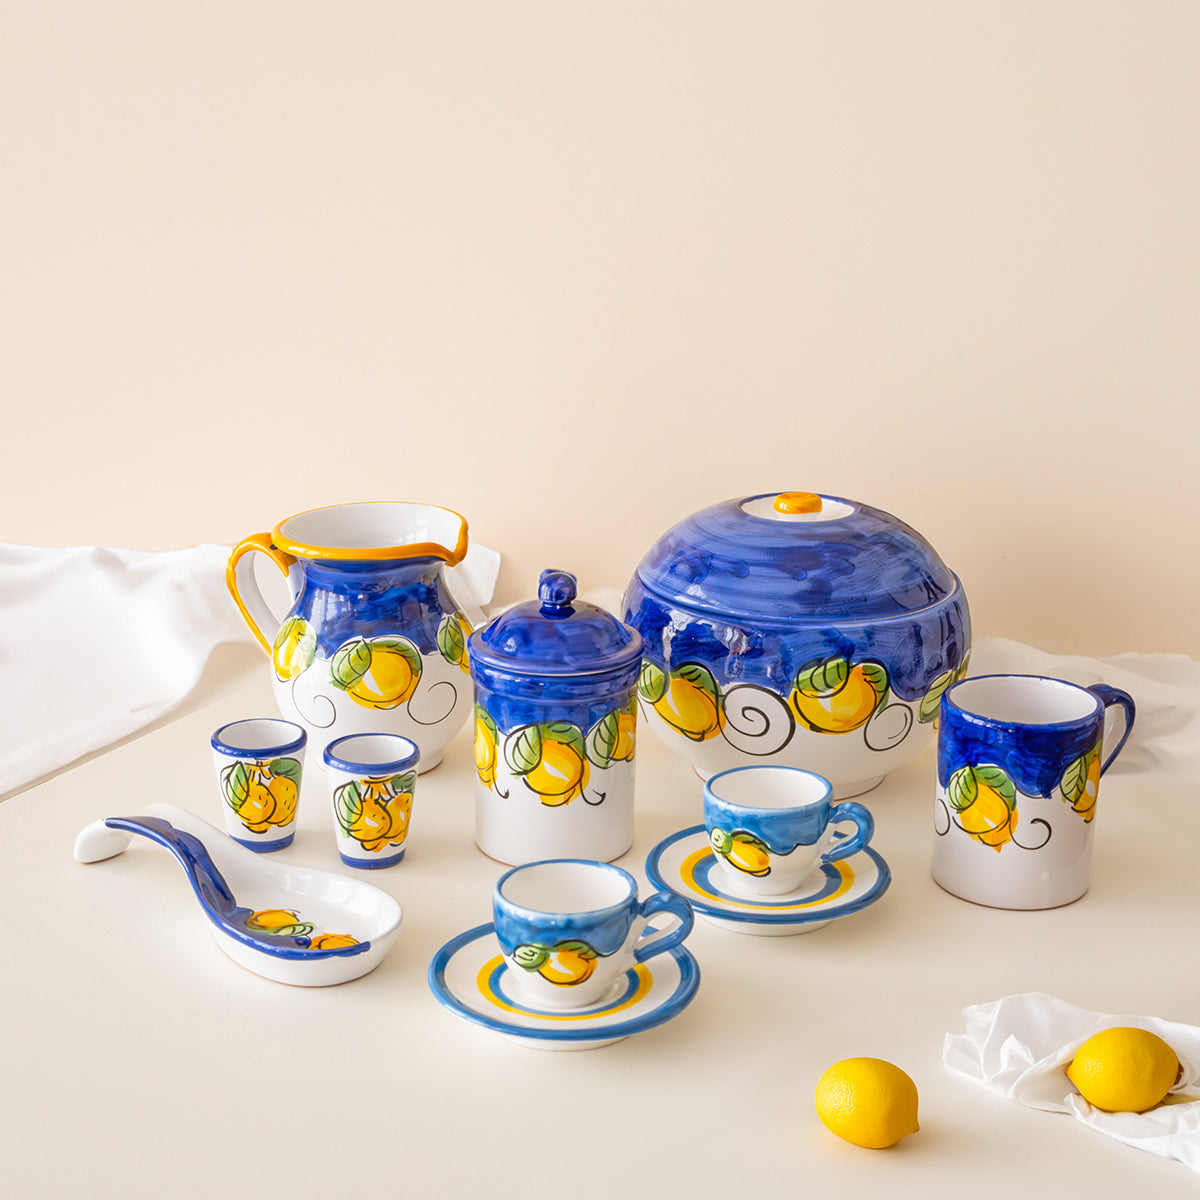 Iconic Lemon ceramic collection